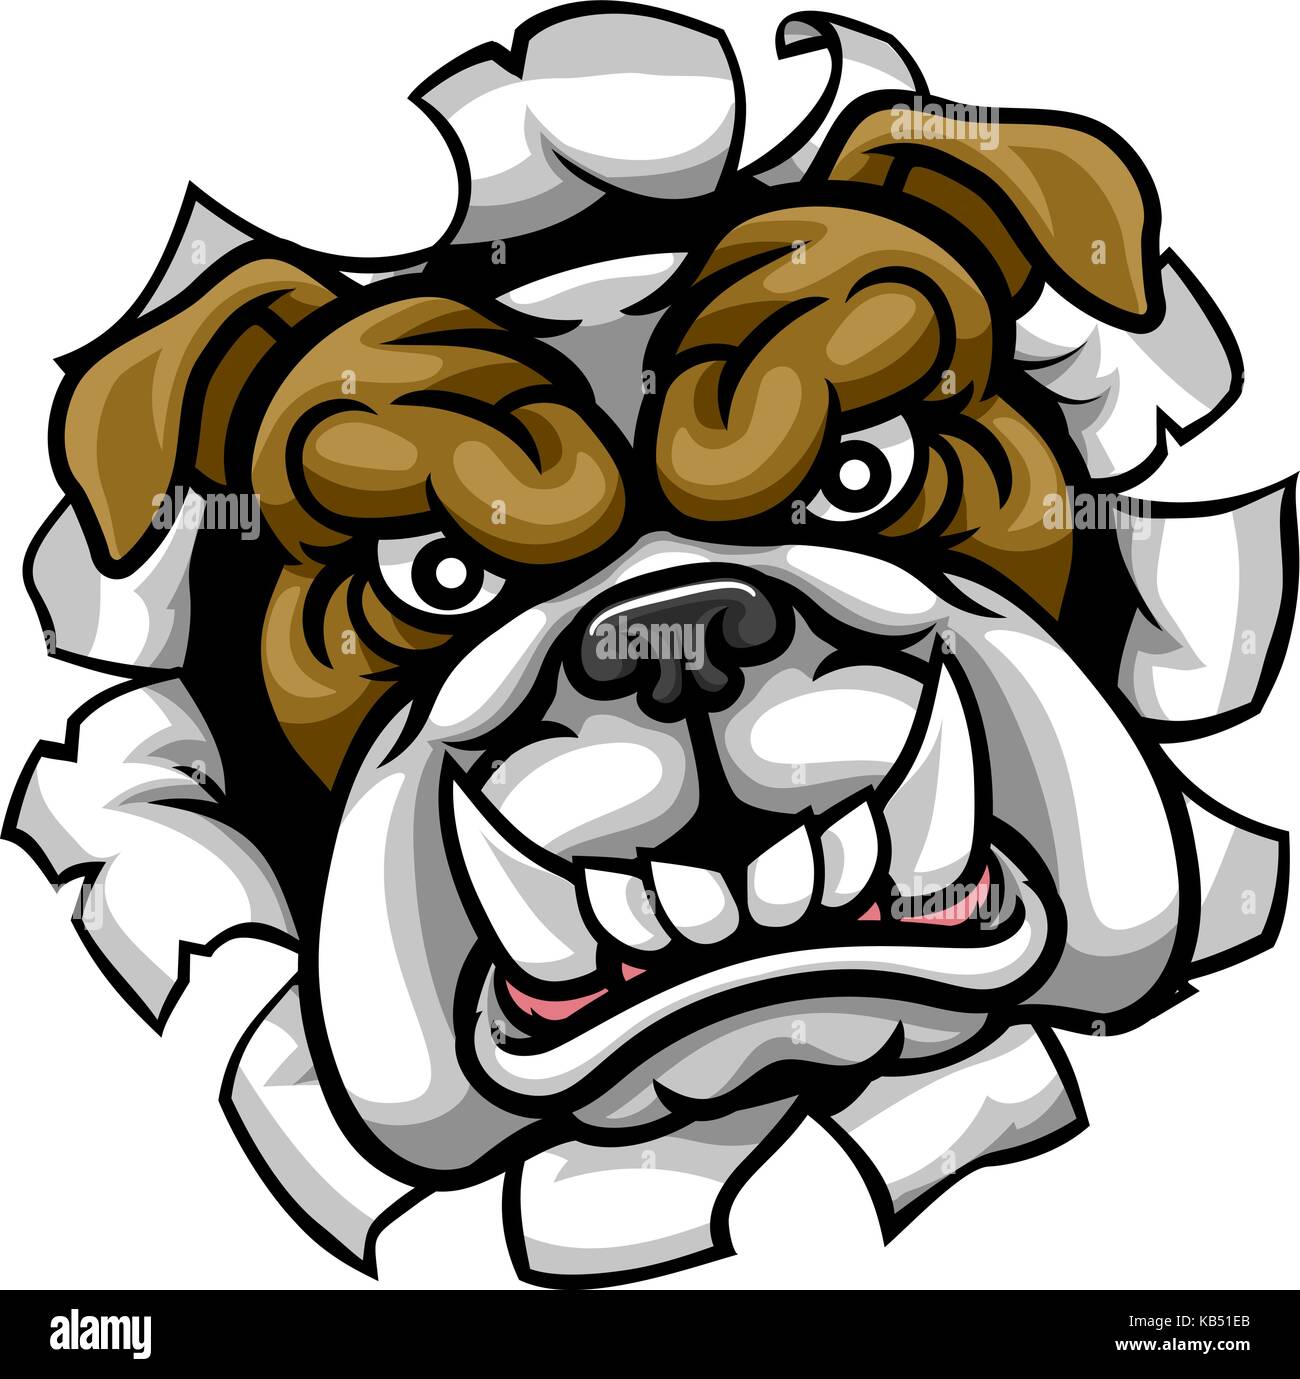 Bulldog Mean Sports Mascot Stock Vector